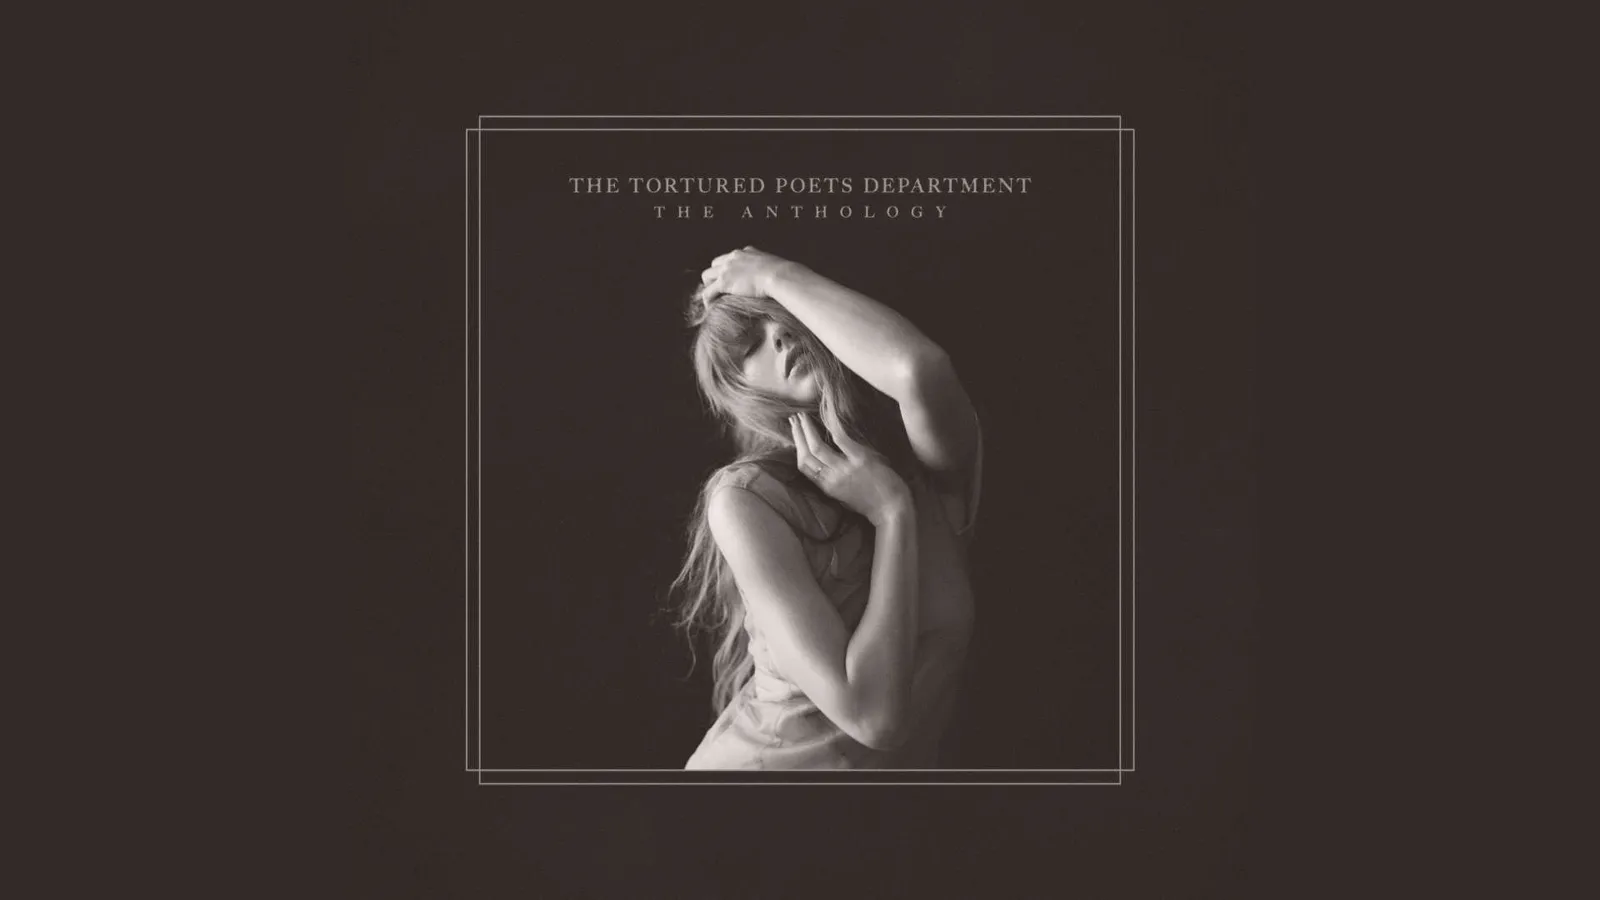 8 Fakta Album 'The Tortured Poets Department' Oleh Taylor Swift